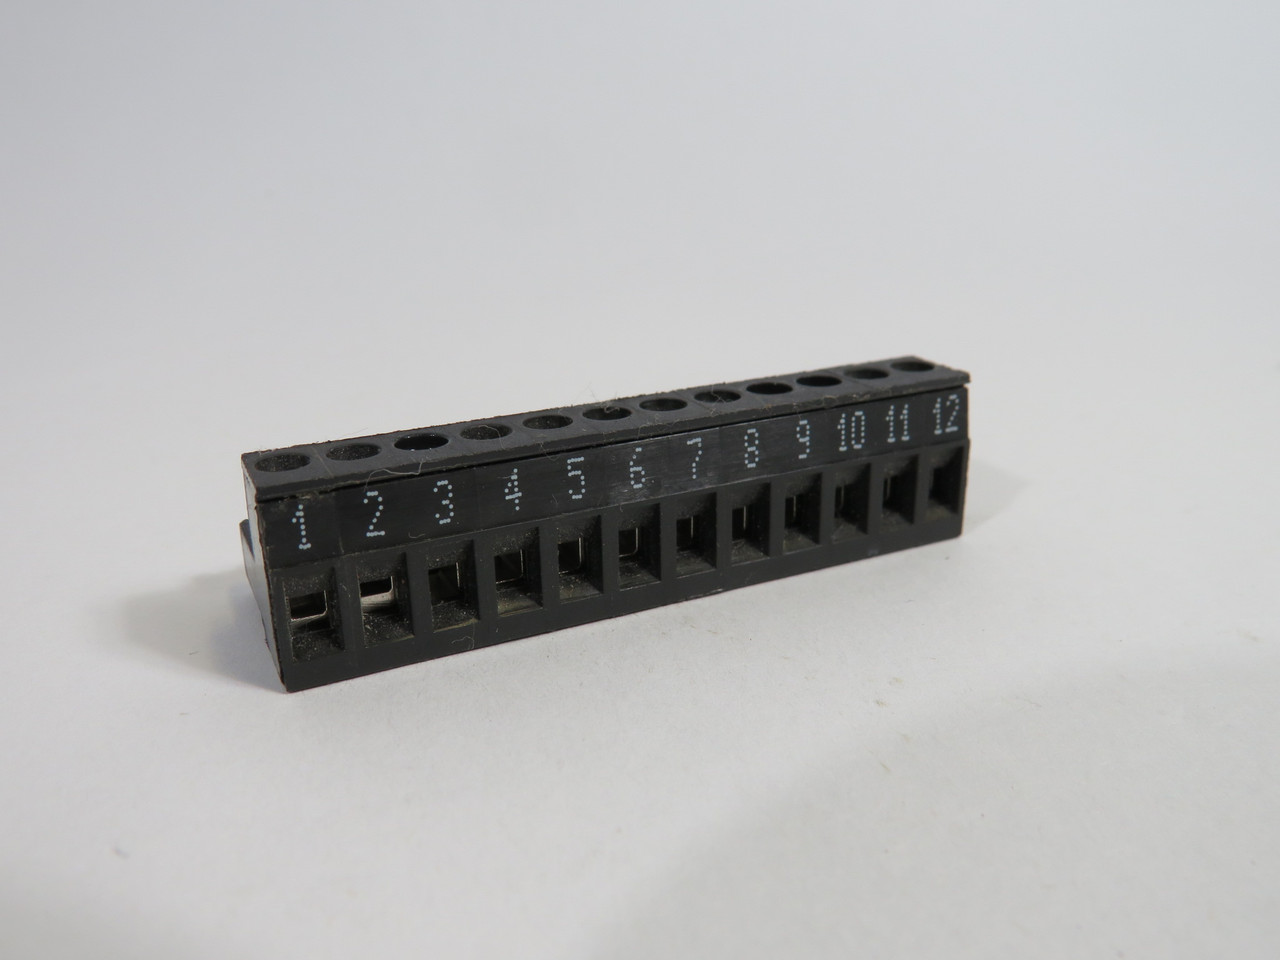 Wieland 8113B-12 PCB Connector 2.5mm 250V 12-Pole Black USED